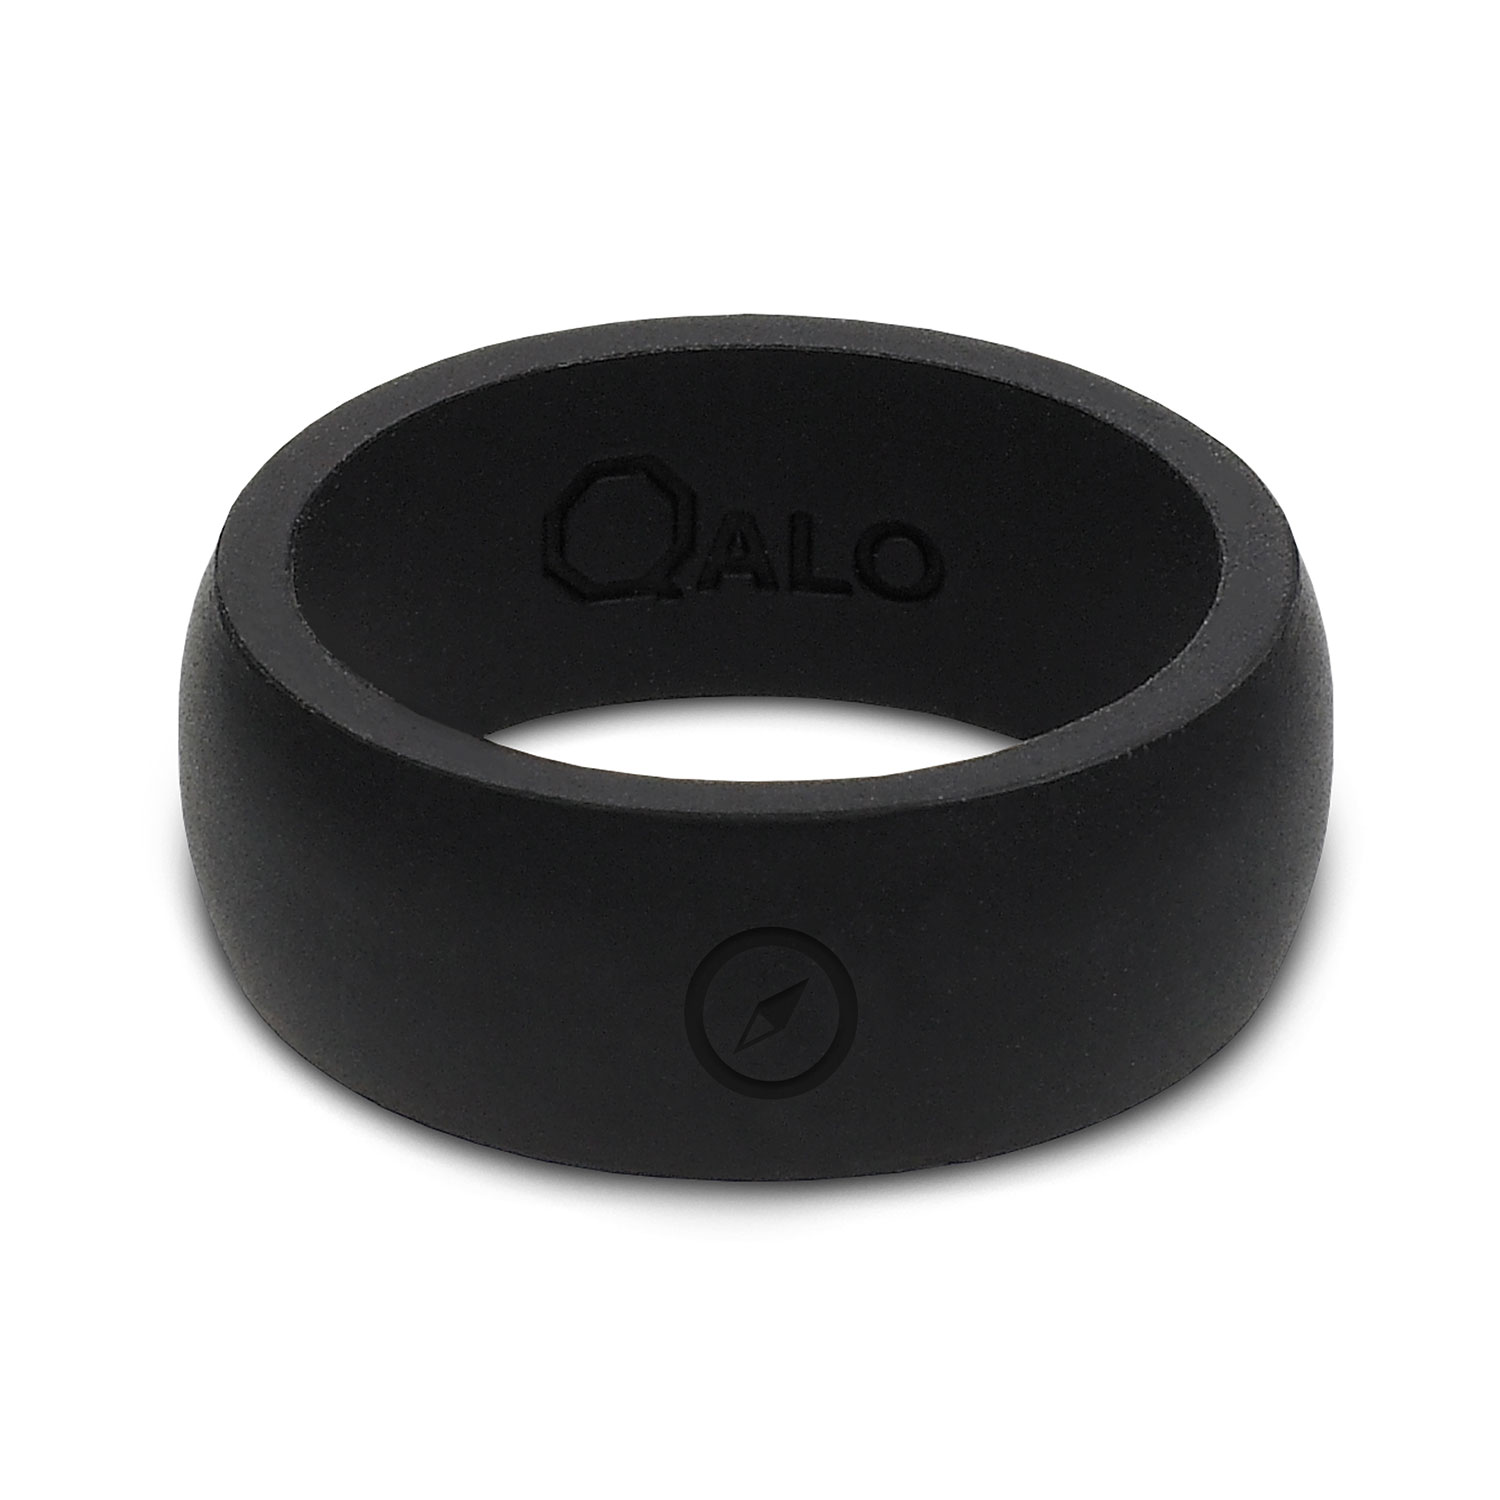 Qalo Men's Classic Outdoor Ring